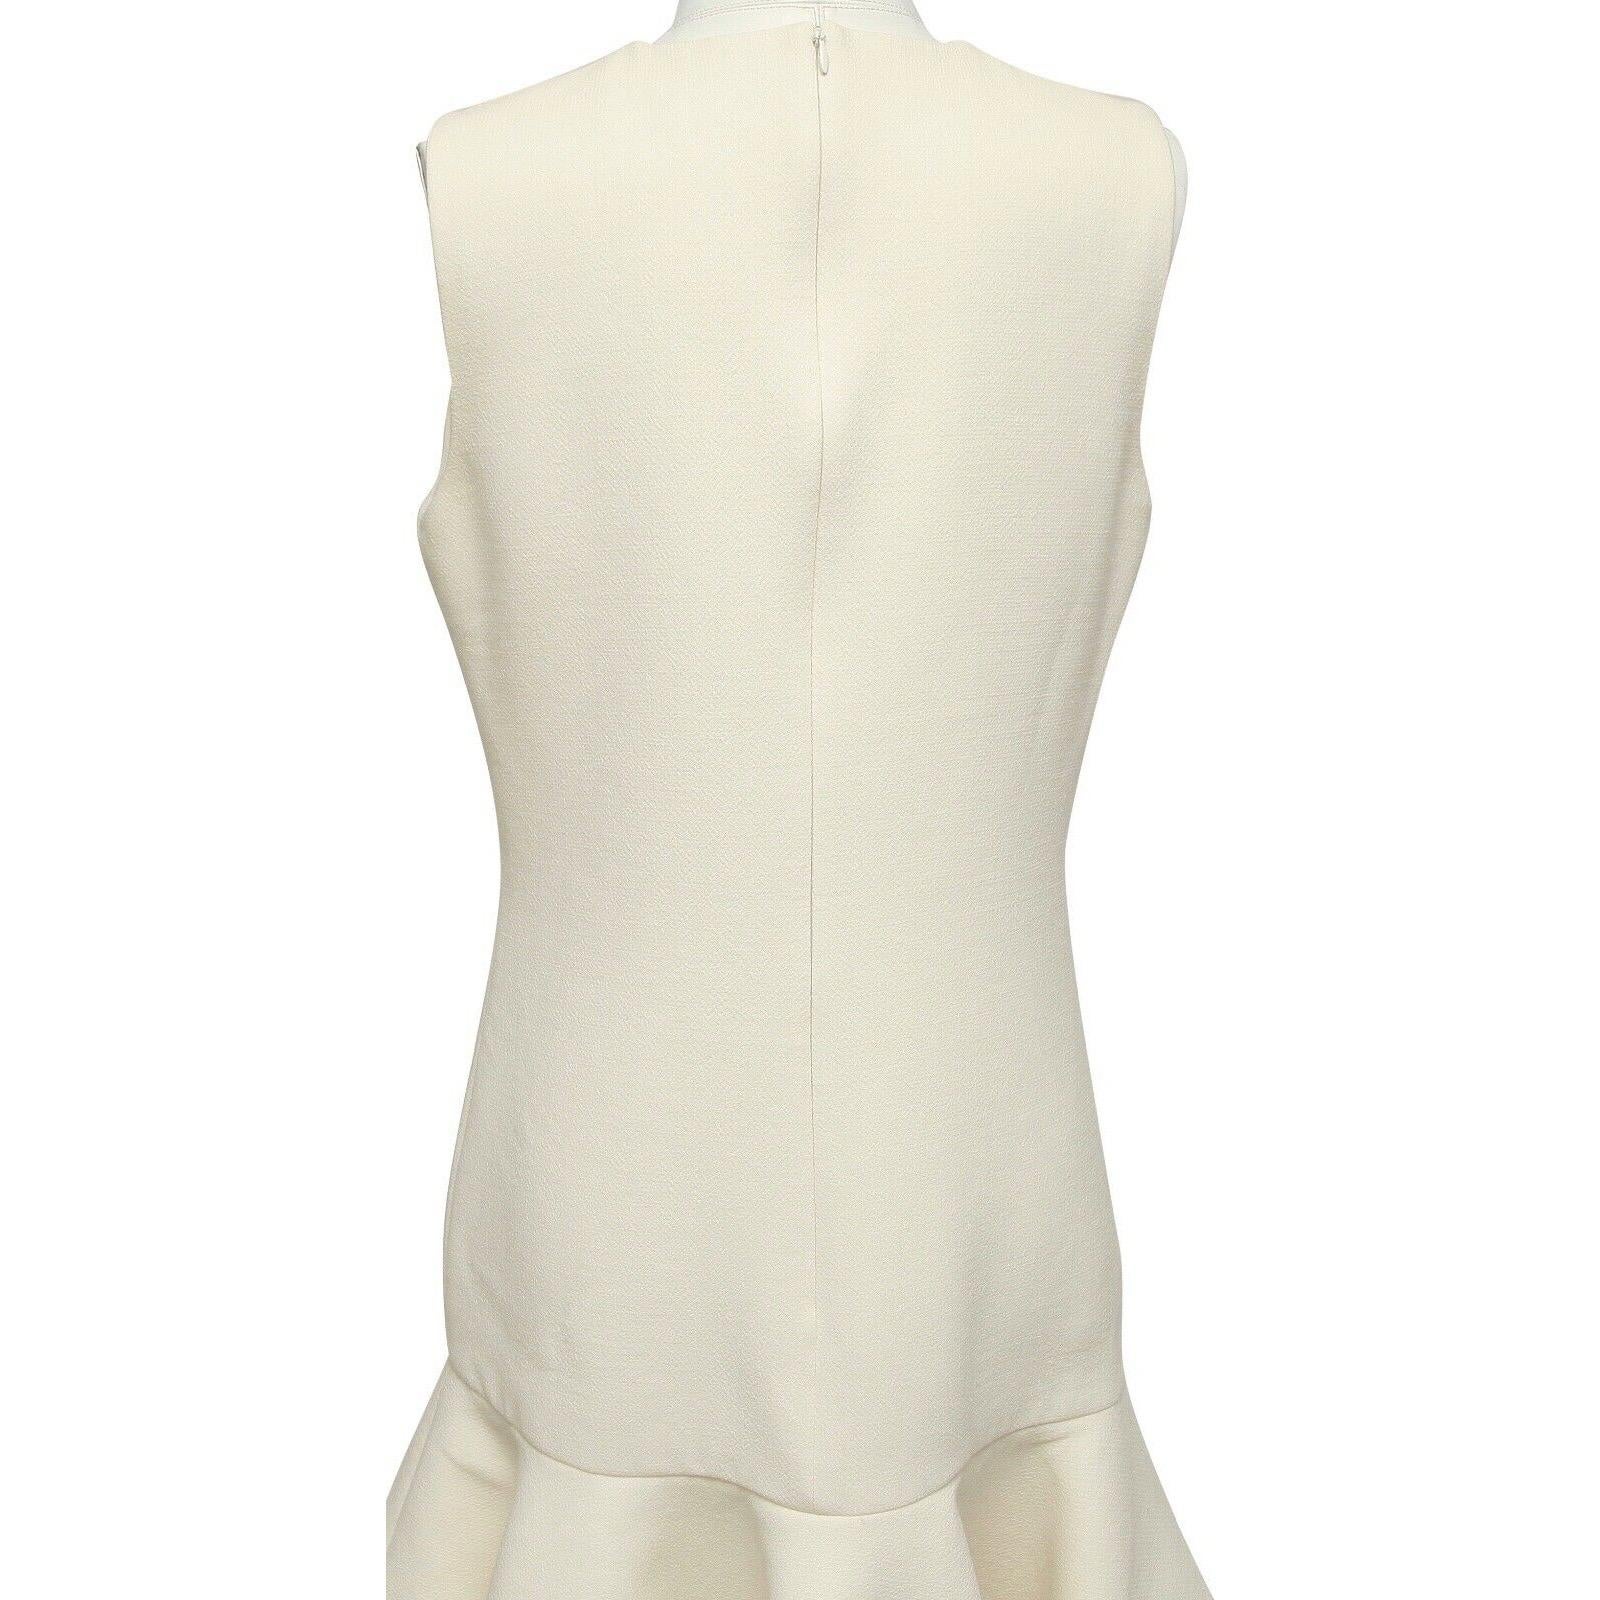 VICTORIA VICTORIA BECKHAM Ivory Dress Sleeveless Wool Crepe Flared Sz M For Sale 2